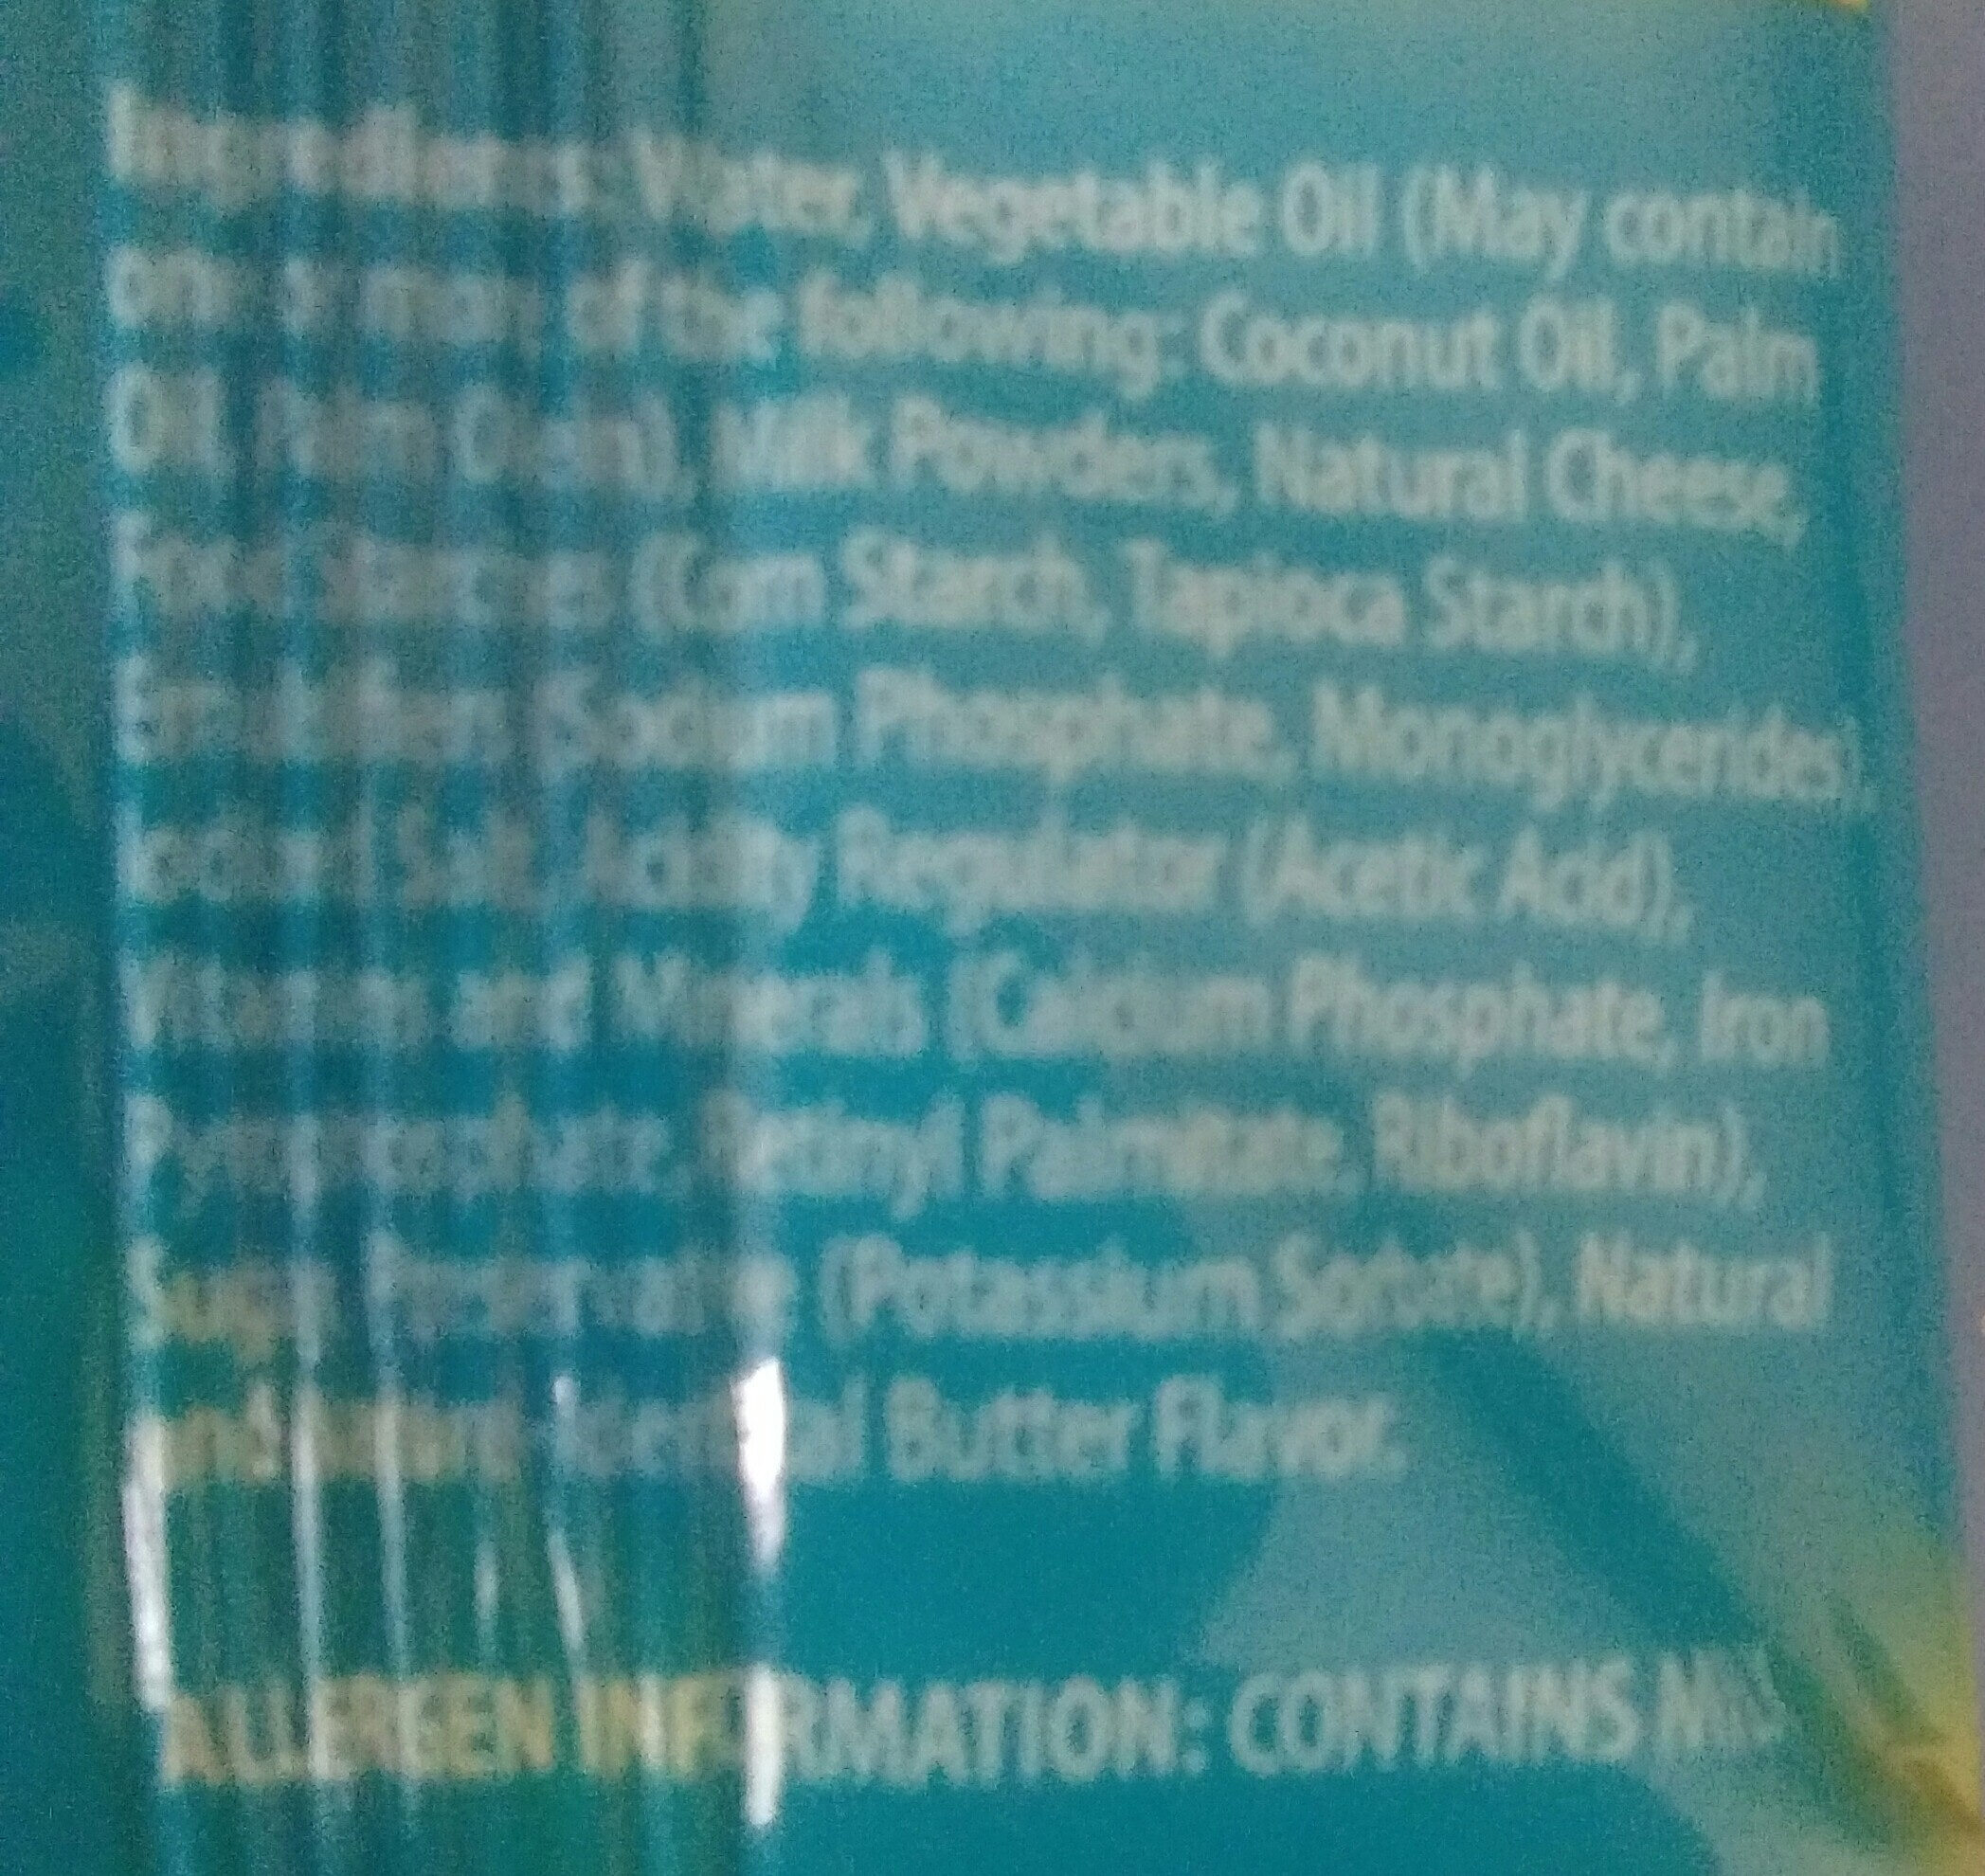 Eden sulit pack original - Ingredients